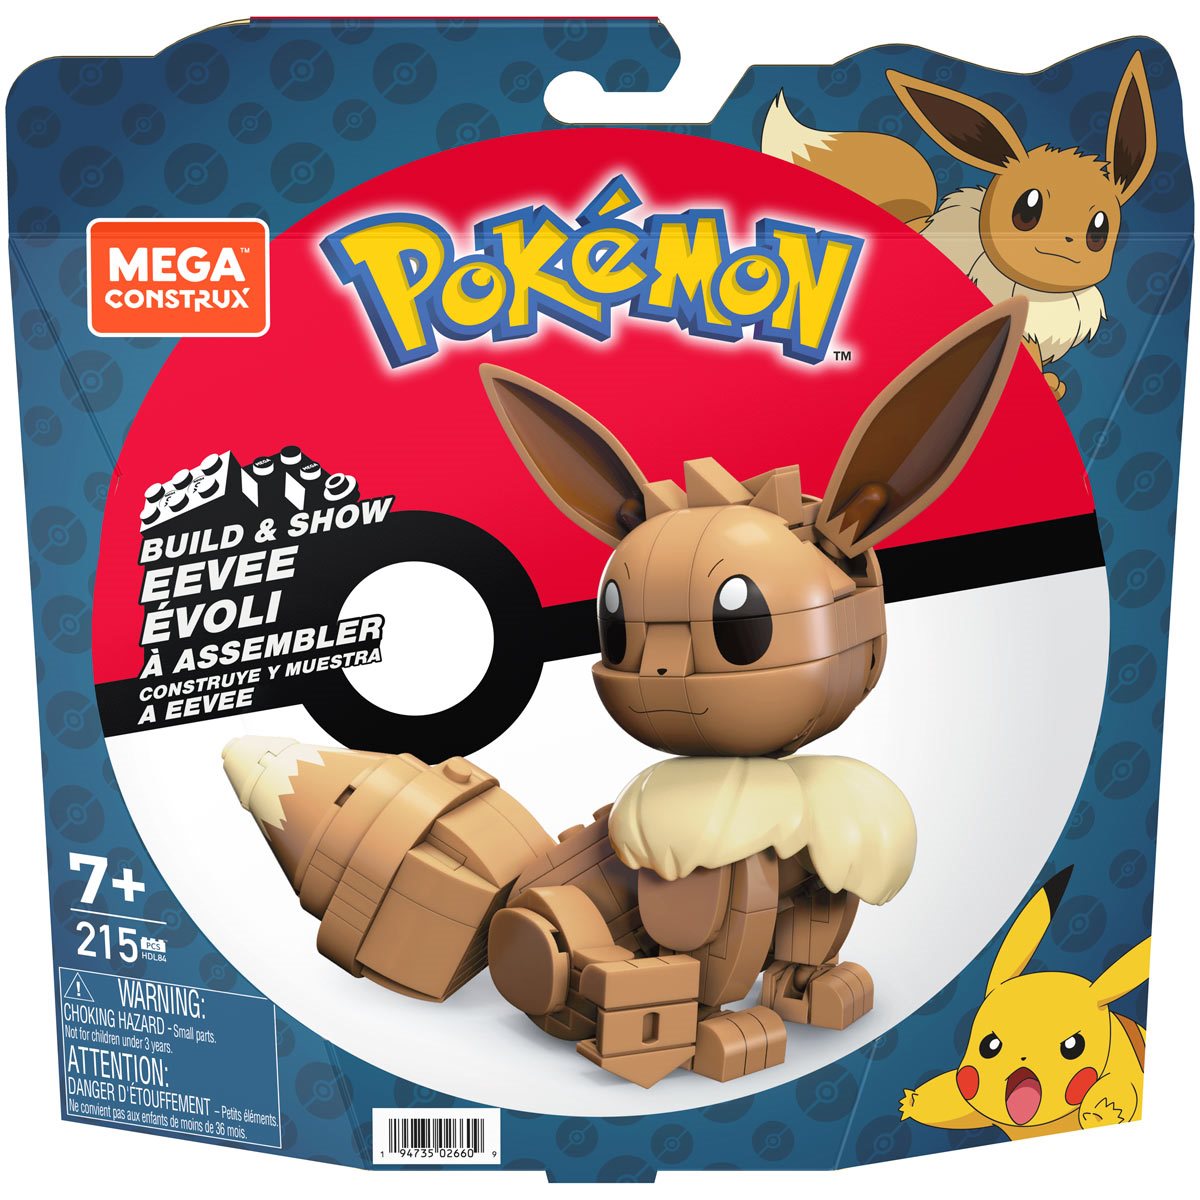 Buy Mega Construx Pokemon Every Eevee Evolution Toy Building Set